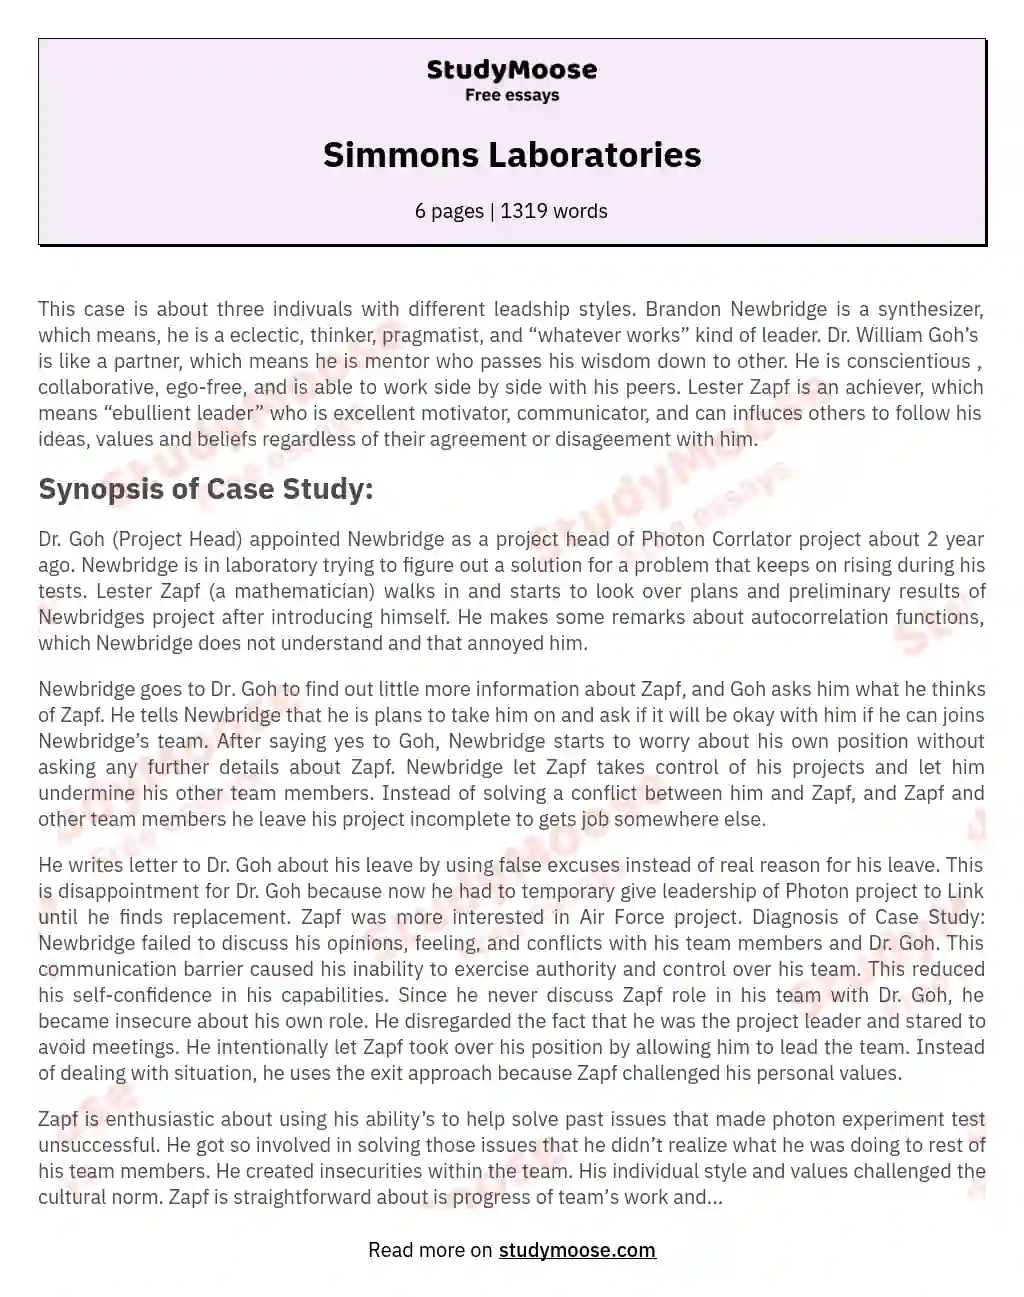 Simmons Laboratories essay